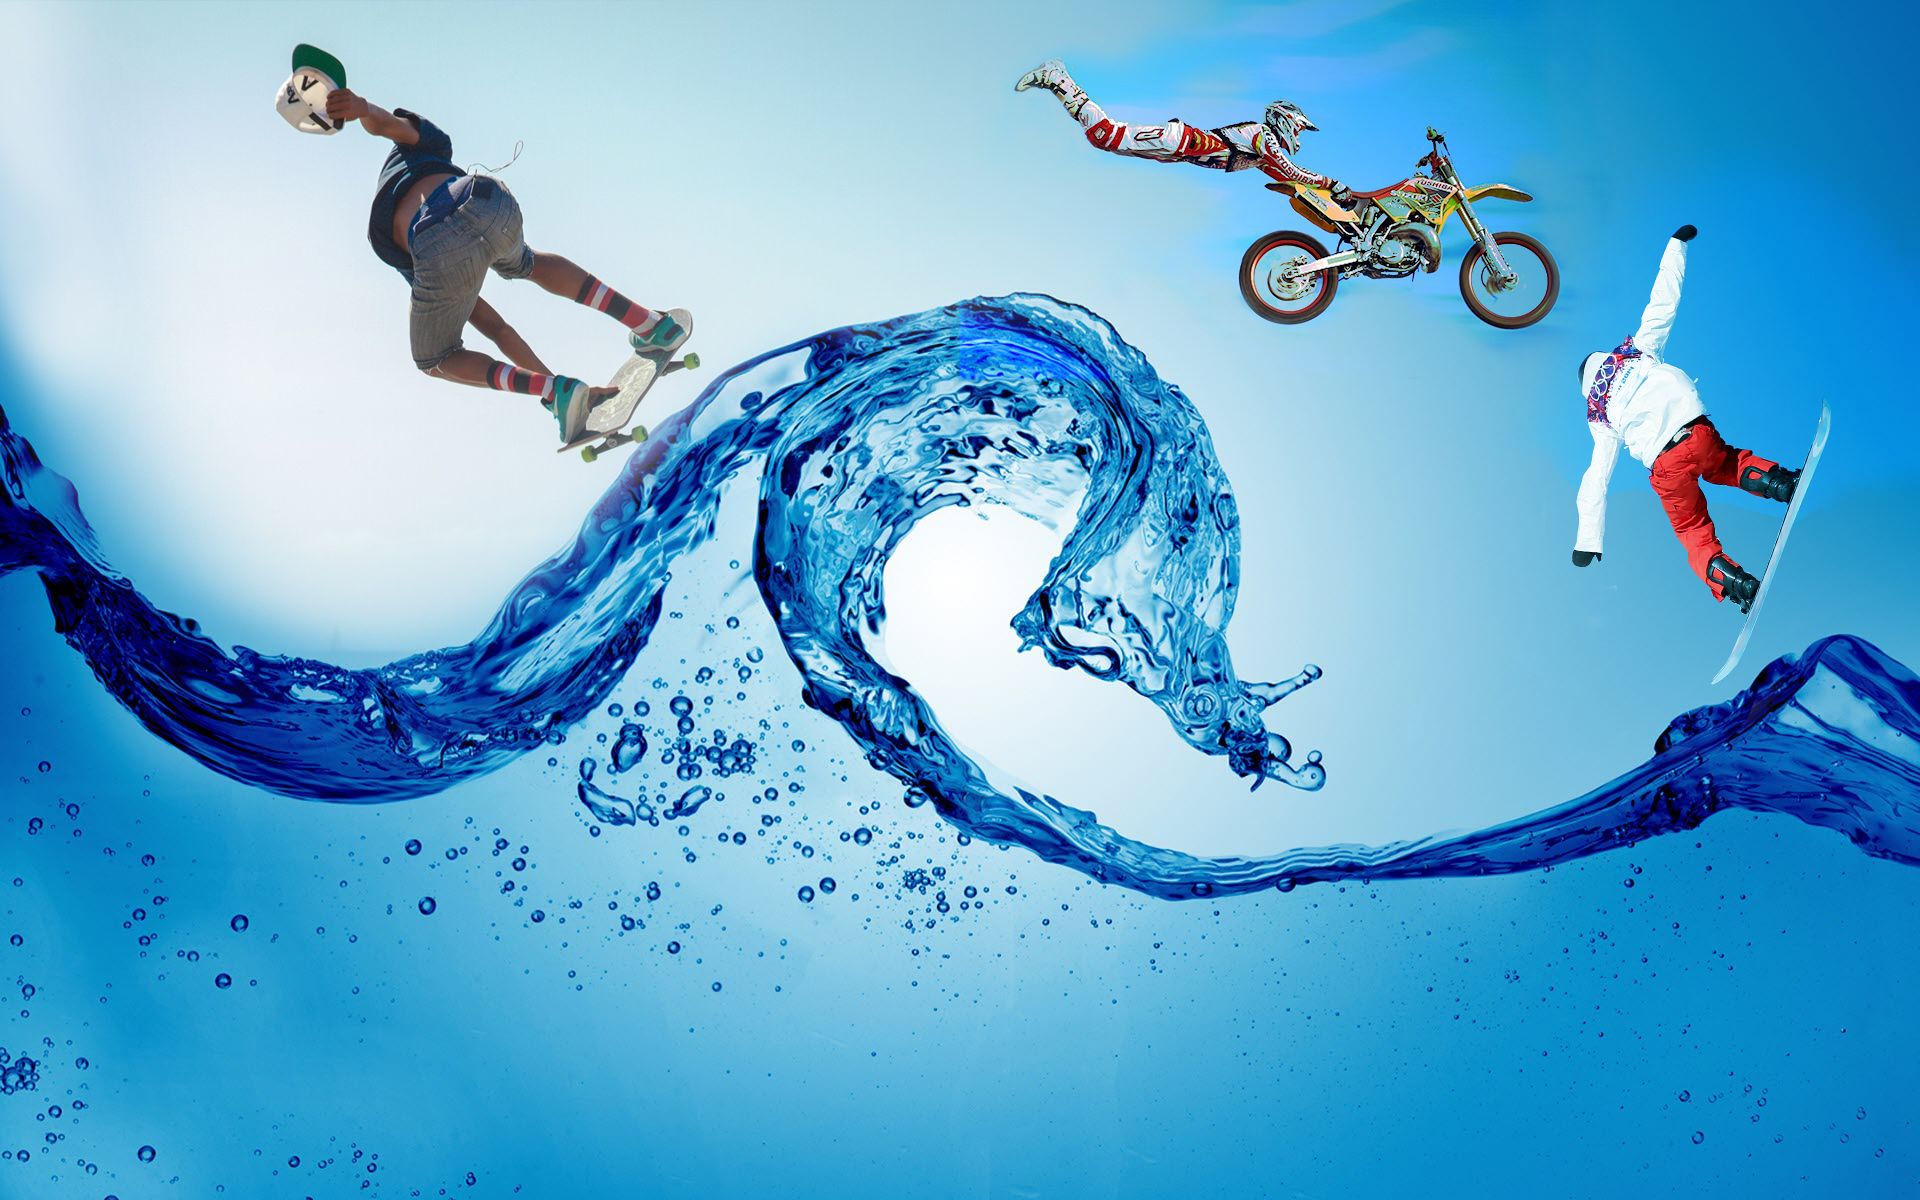 PC Wallpapers sports, artistic, motocross, skateboard, snowboard, water